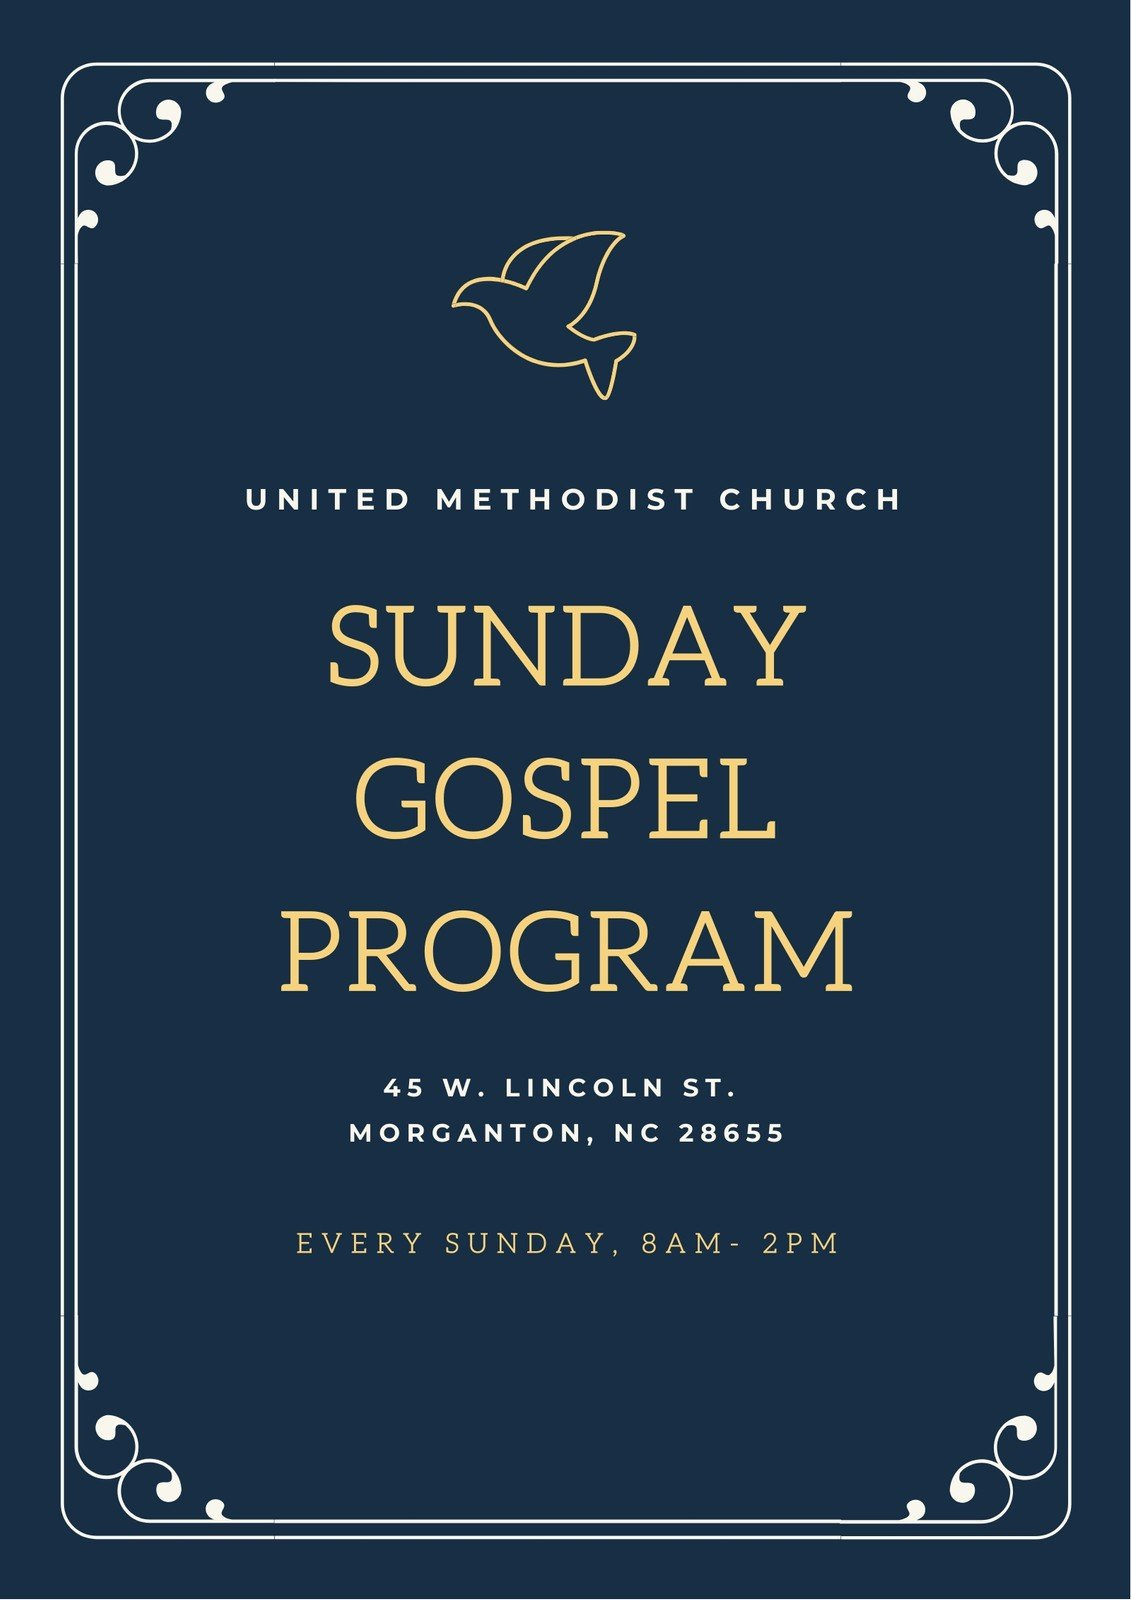 Free, Printable, Customizable Church Program Templates | Canva inside Free Printable Church Program Templates